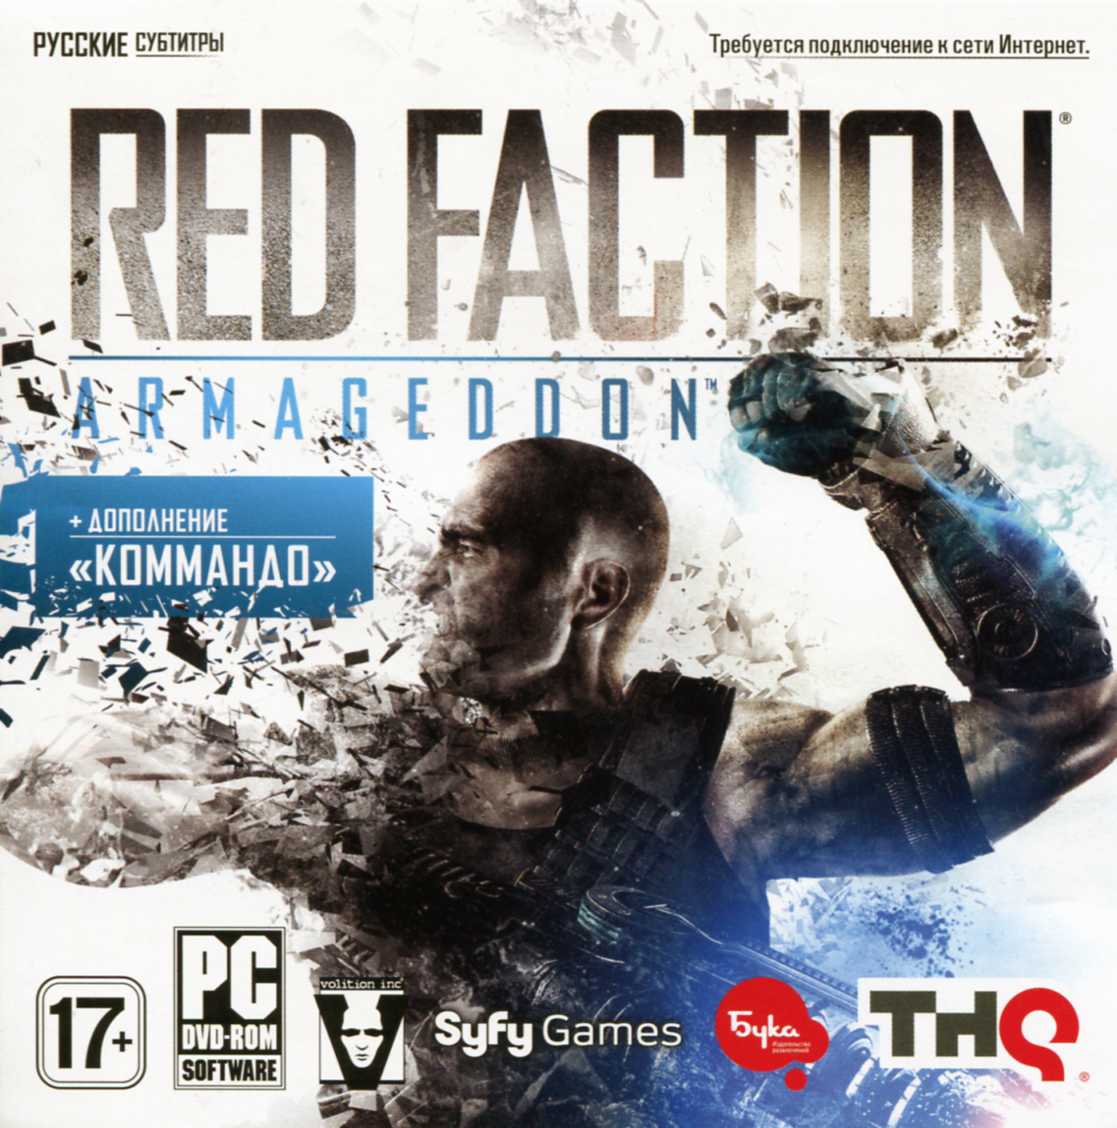 Red Faction: Armageddon + DLC "Commando" (Key Steam)